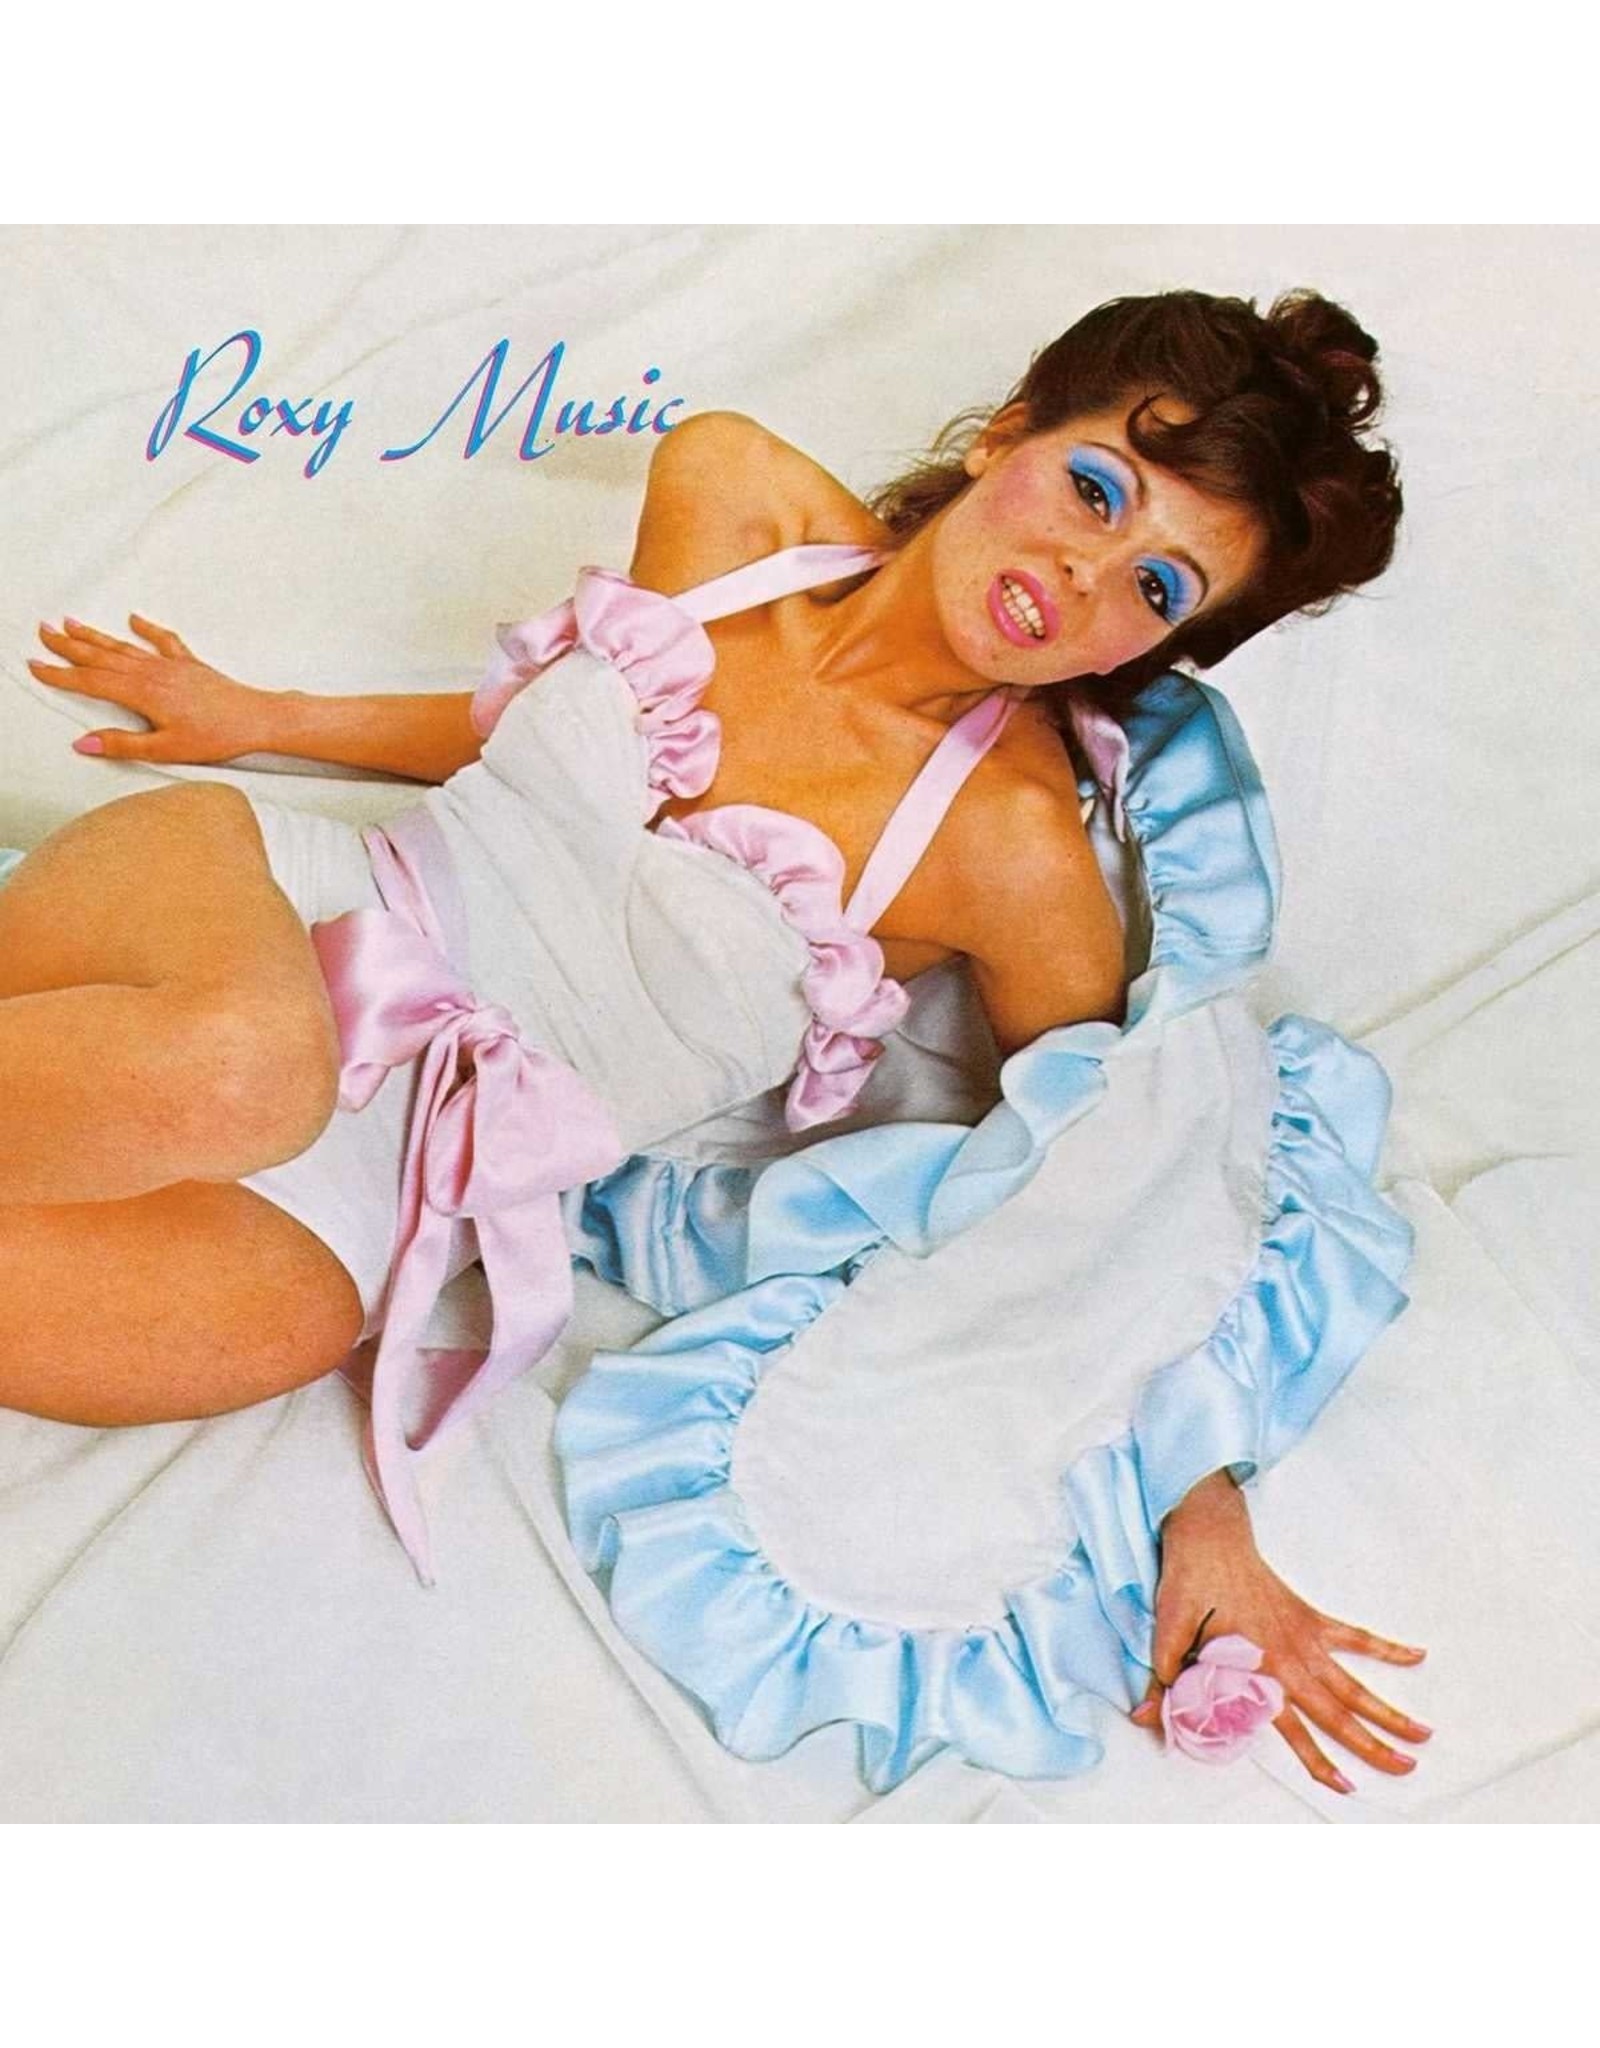 Roxy Music - Roxy Music LP (Half-speed master/Gloss-laminated finish)